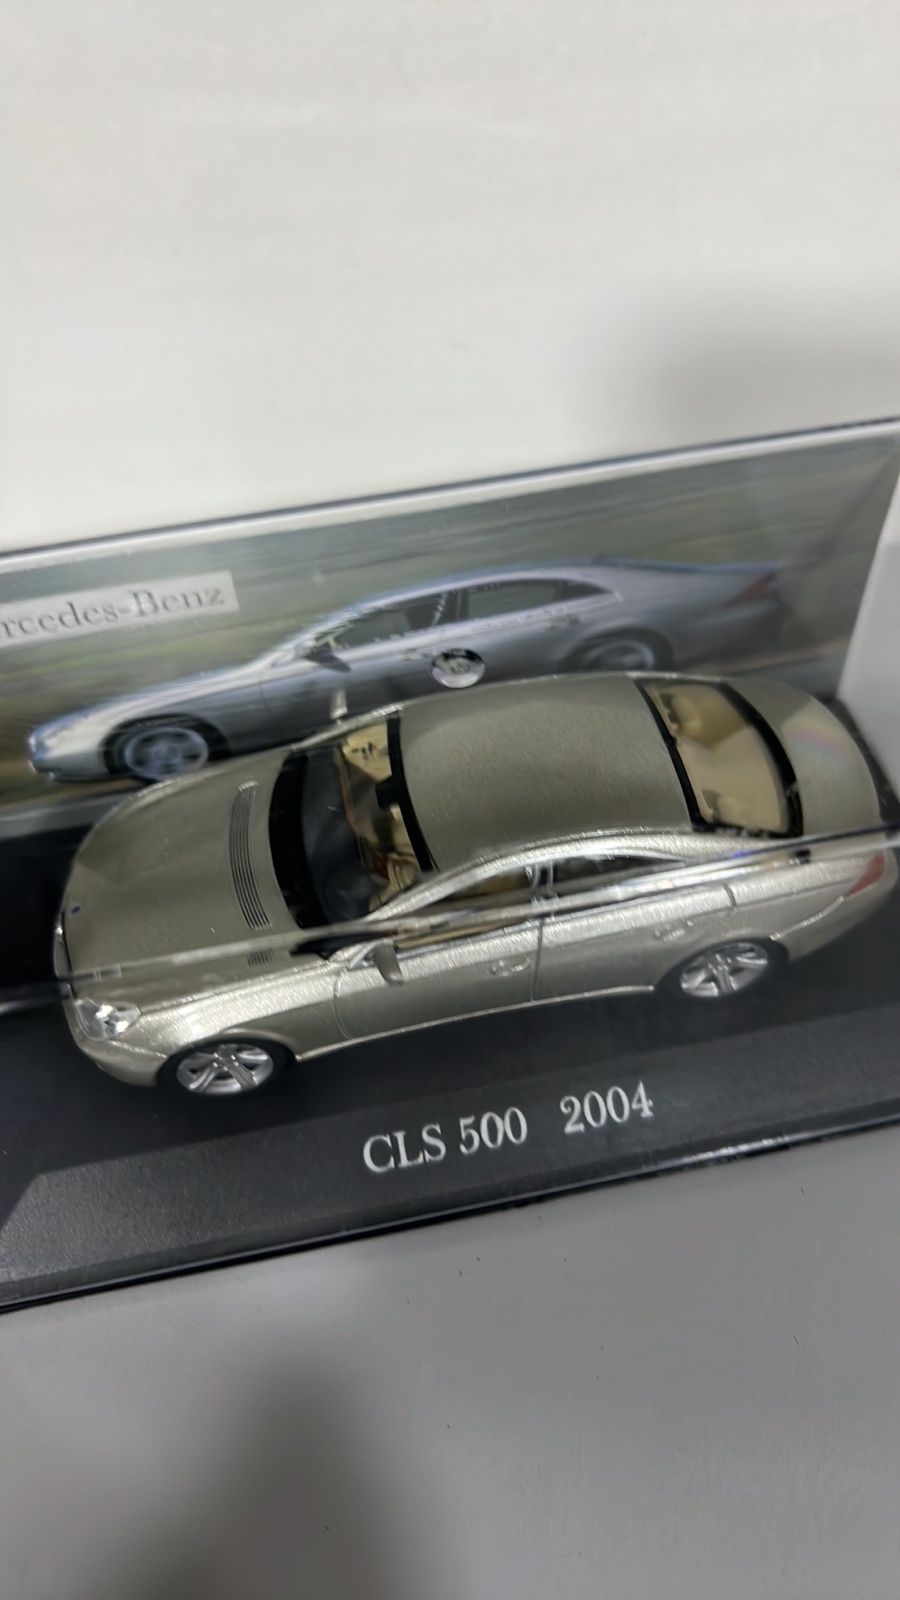 Маштабна модель Mercedes Benz CLS 500. Маштаб 1/43